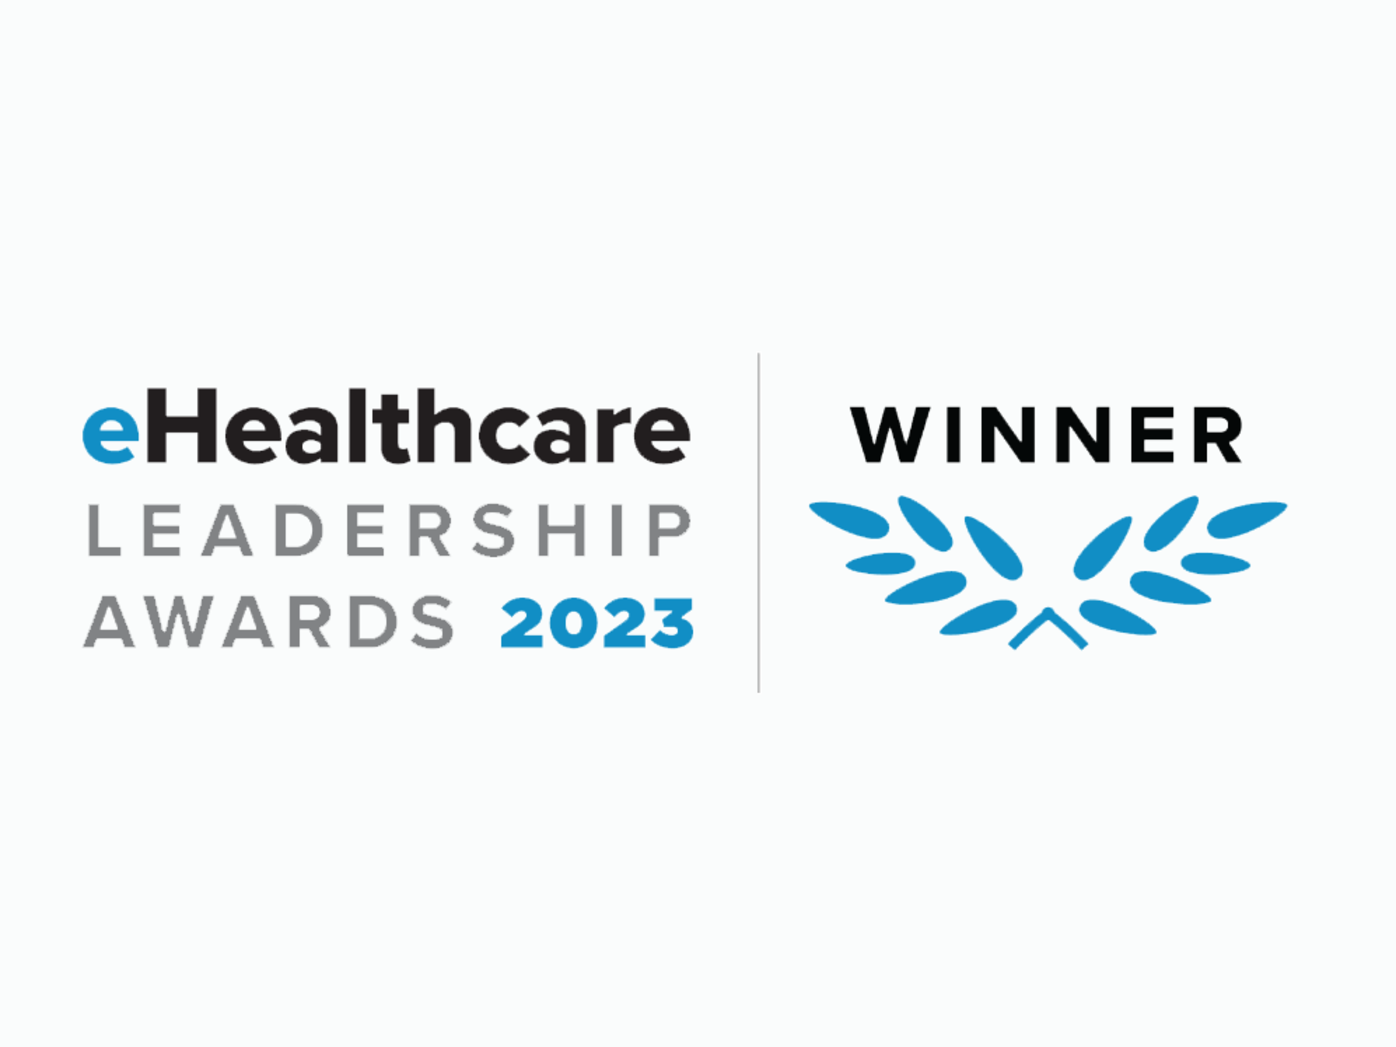 eHealthcare leadership awards 2023 winner award